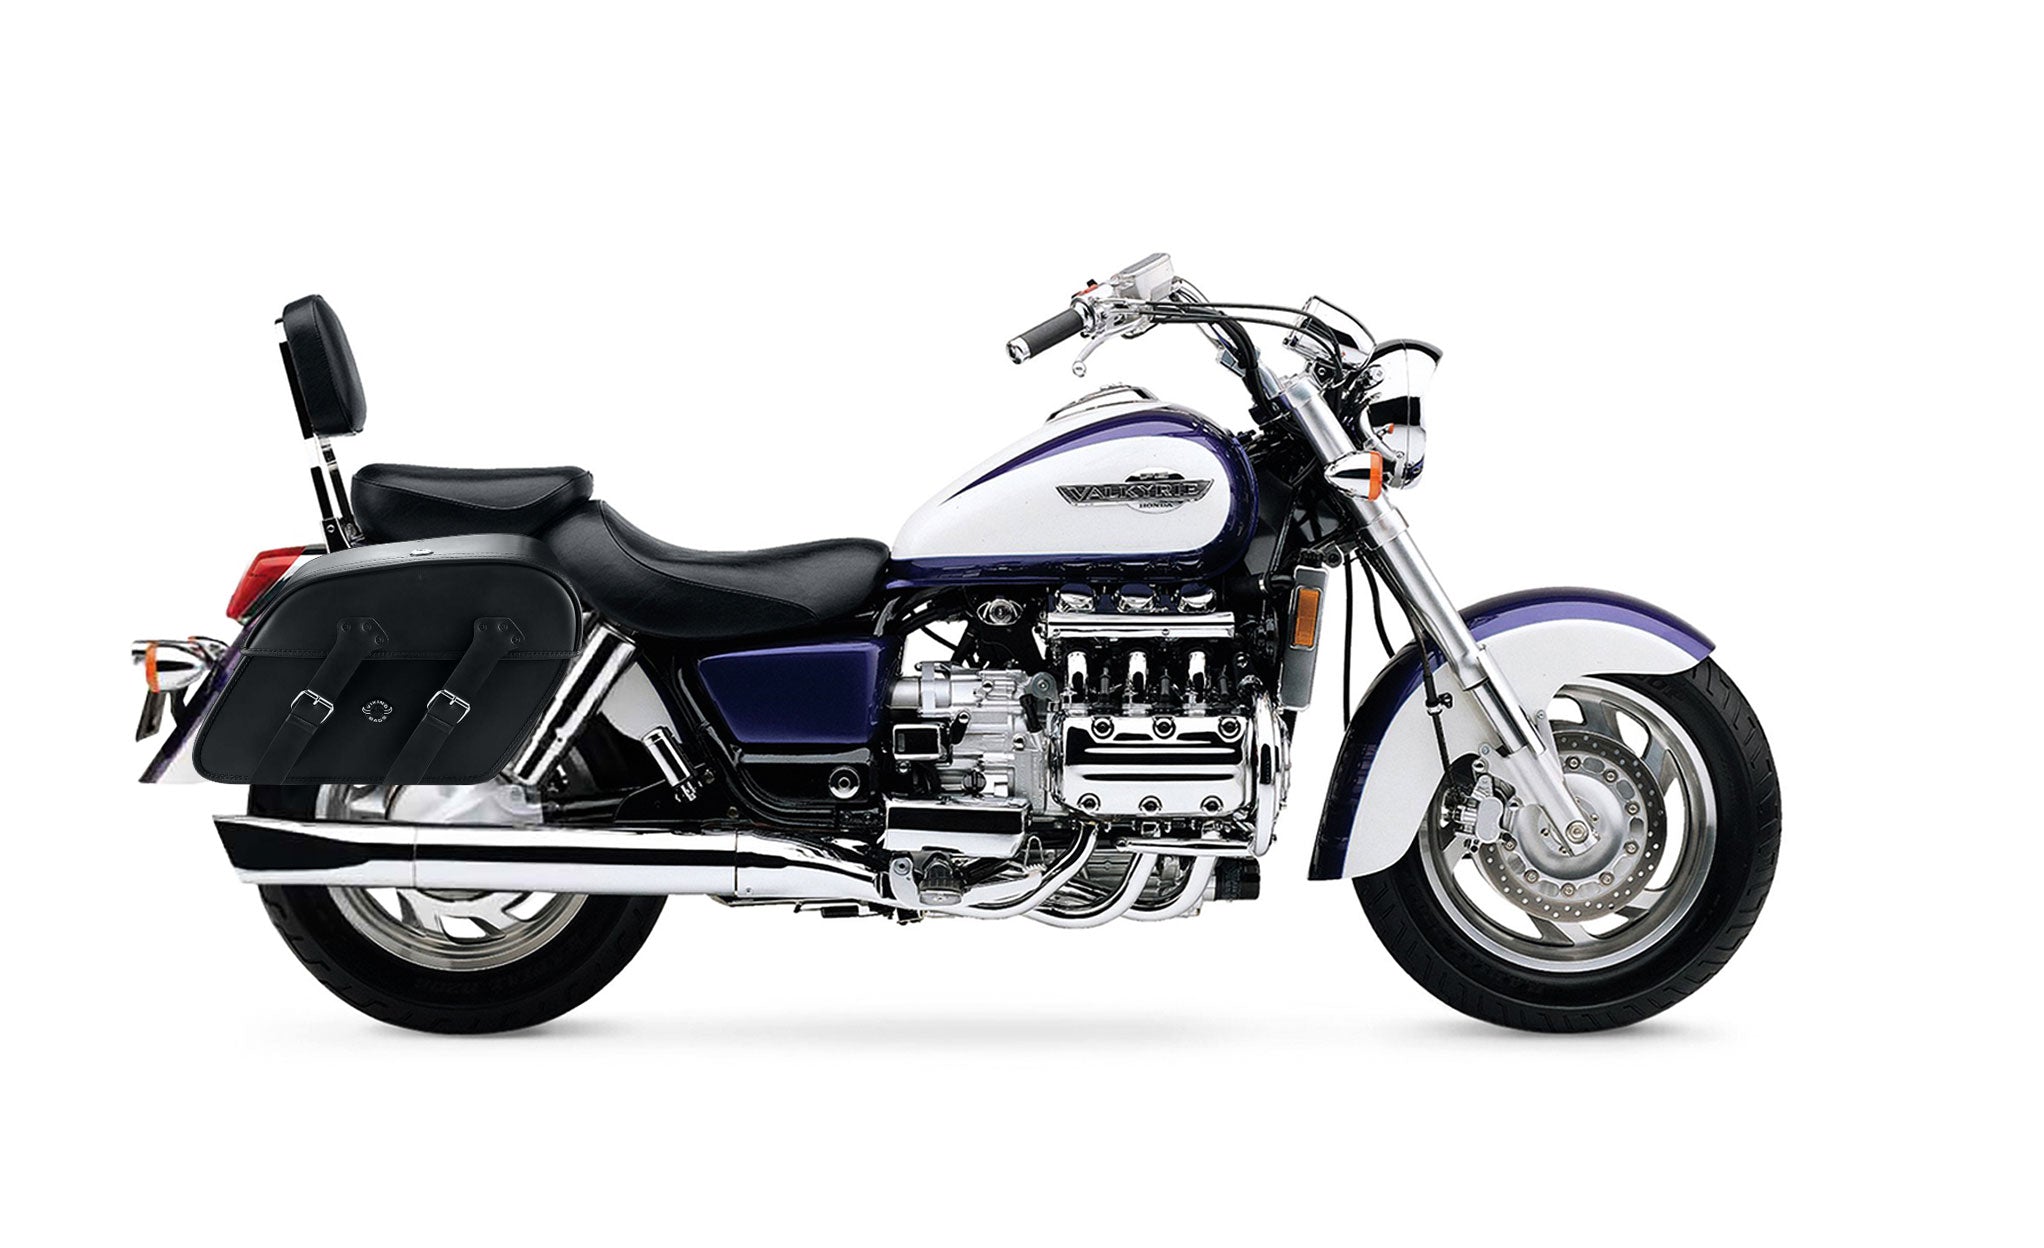 Viking Raven Extra Large Honda 1500 Valkyrie Interstate Leather Motorcycle Saddlebags on Bike Photo @expand